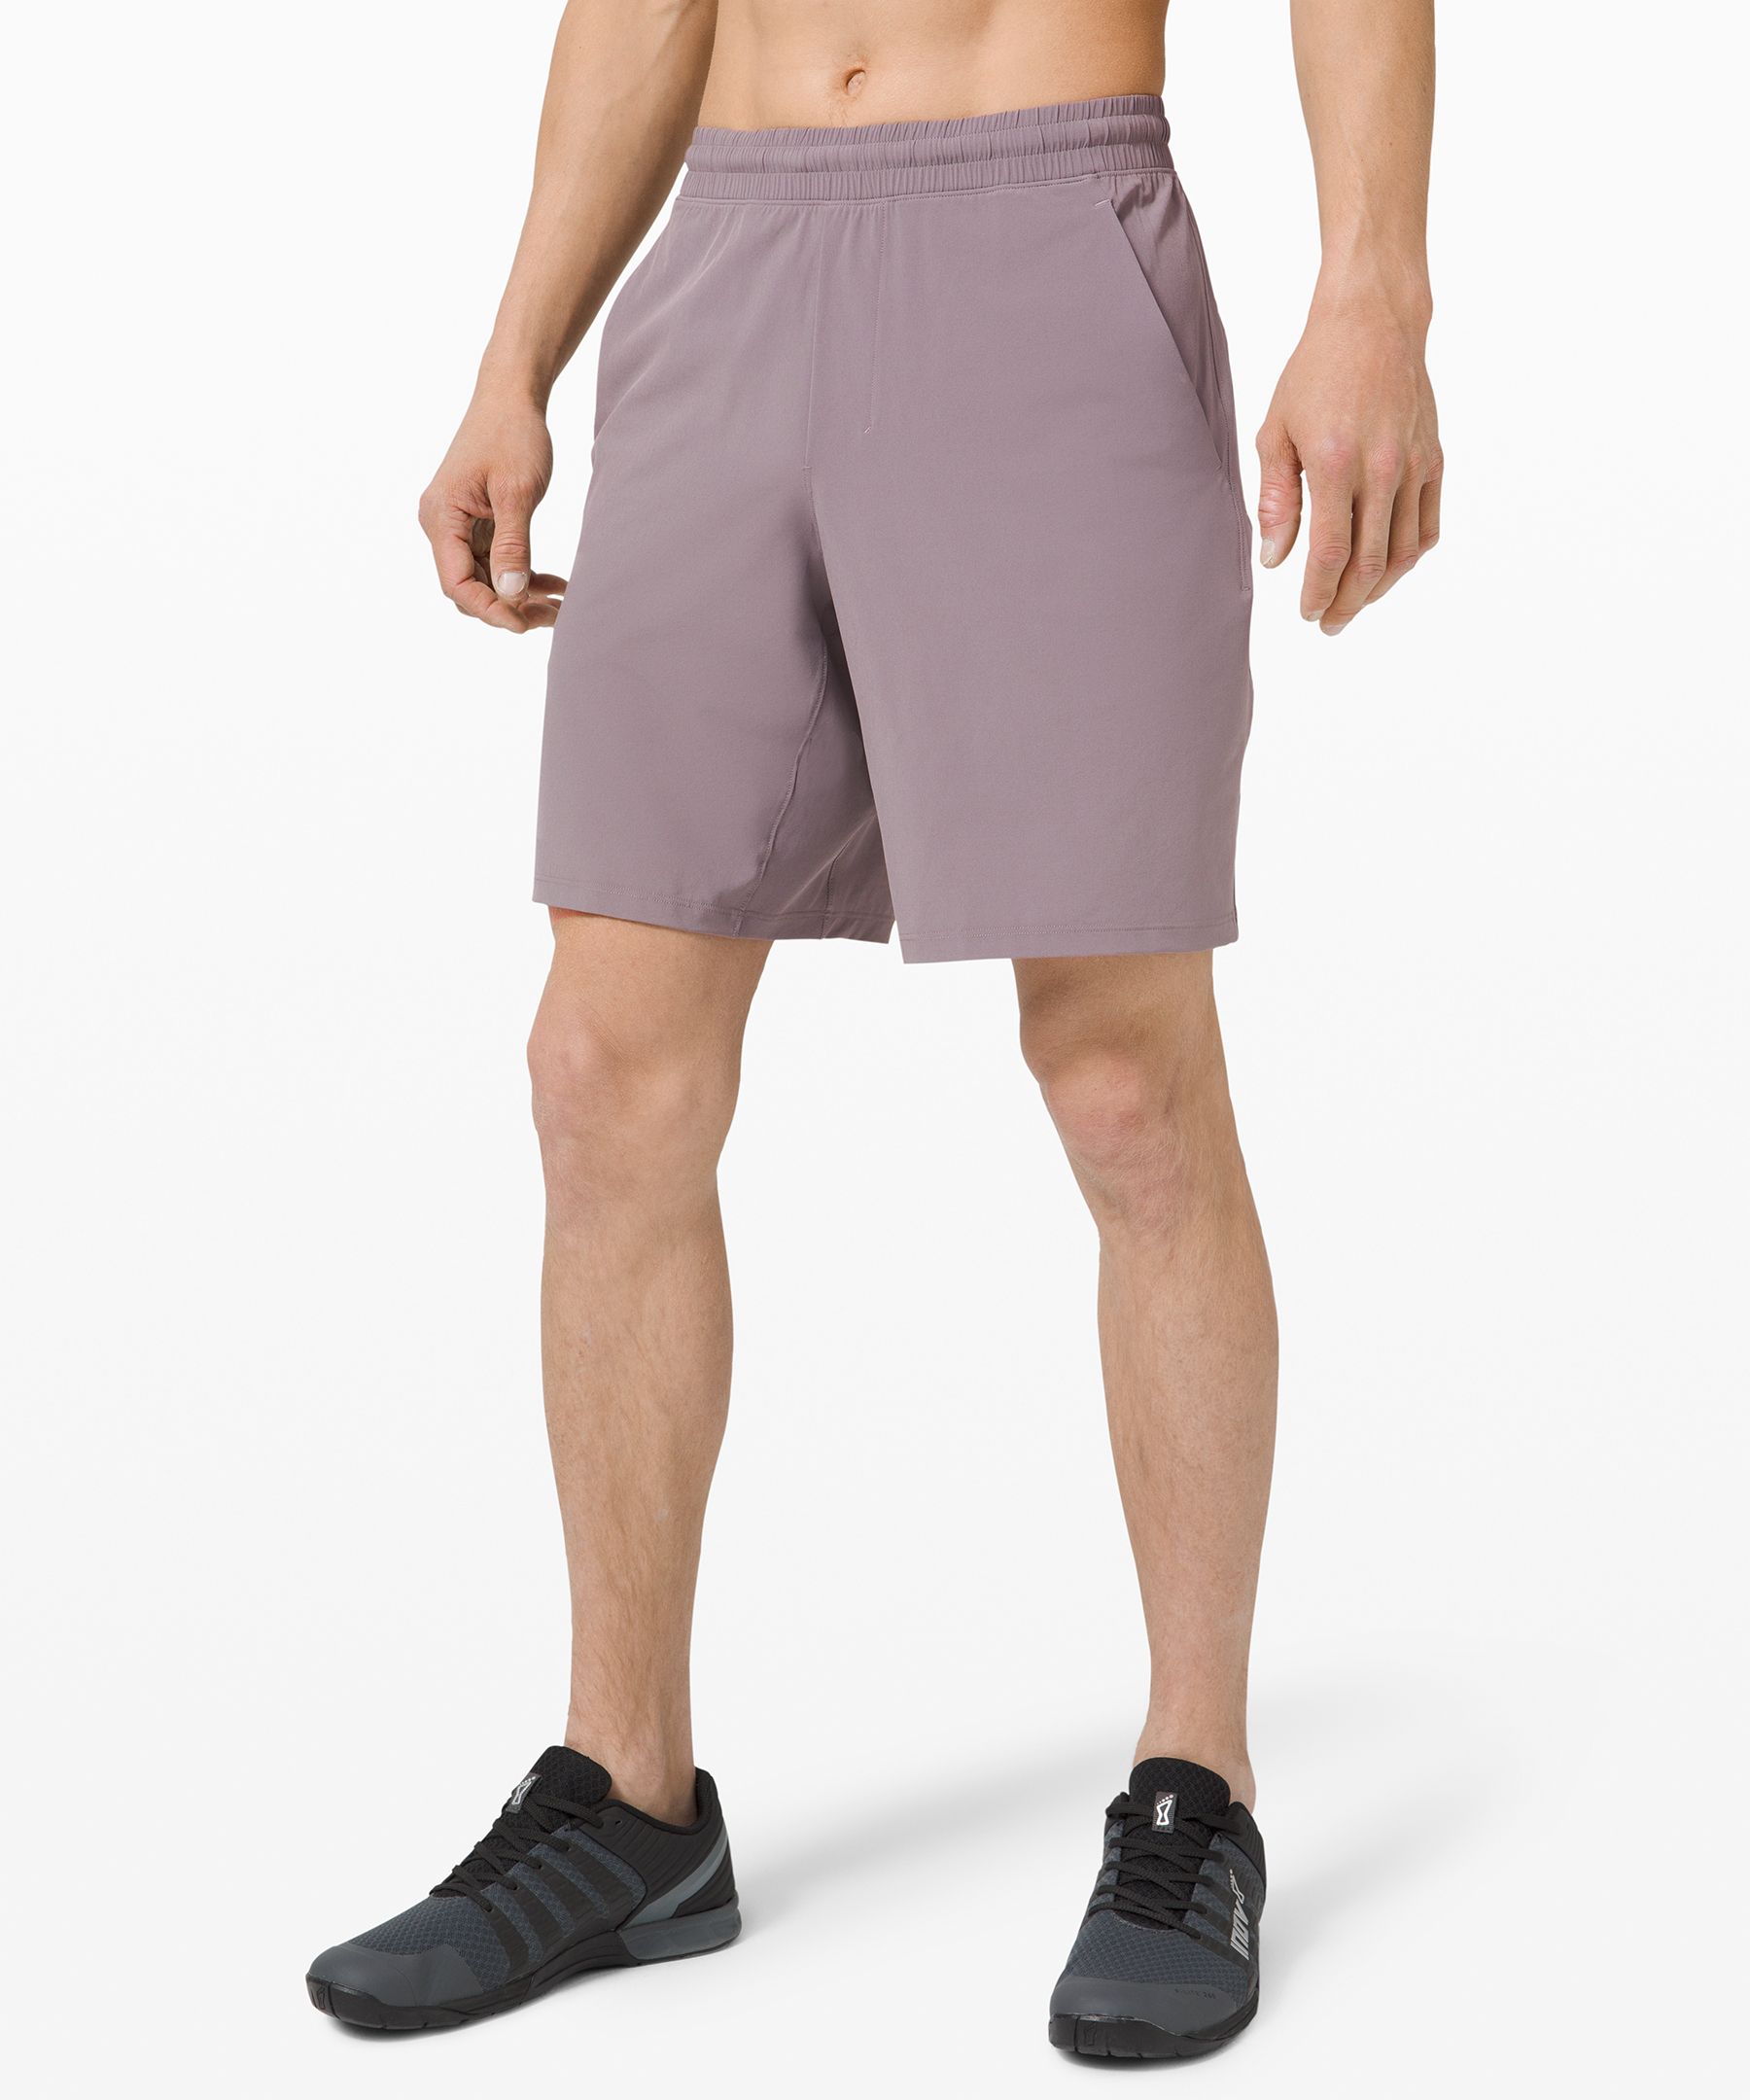 purple lululemon shorts